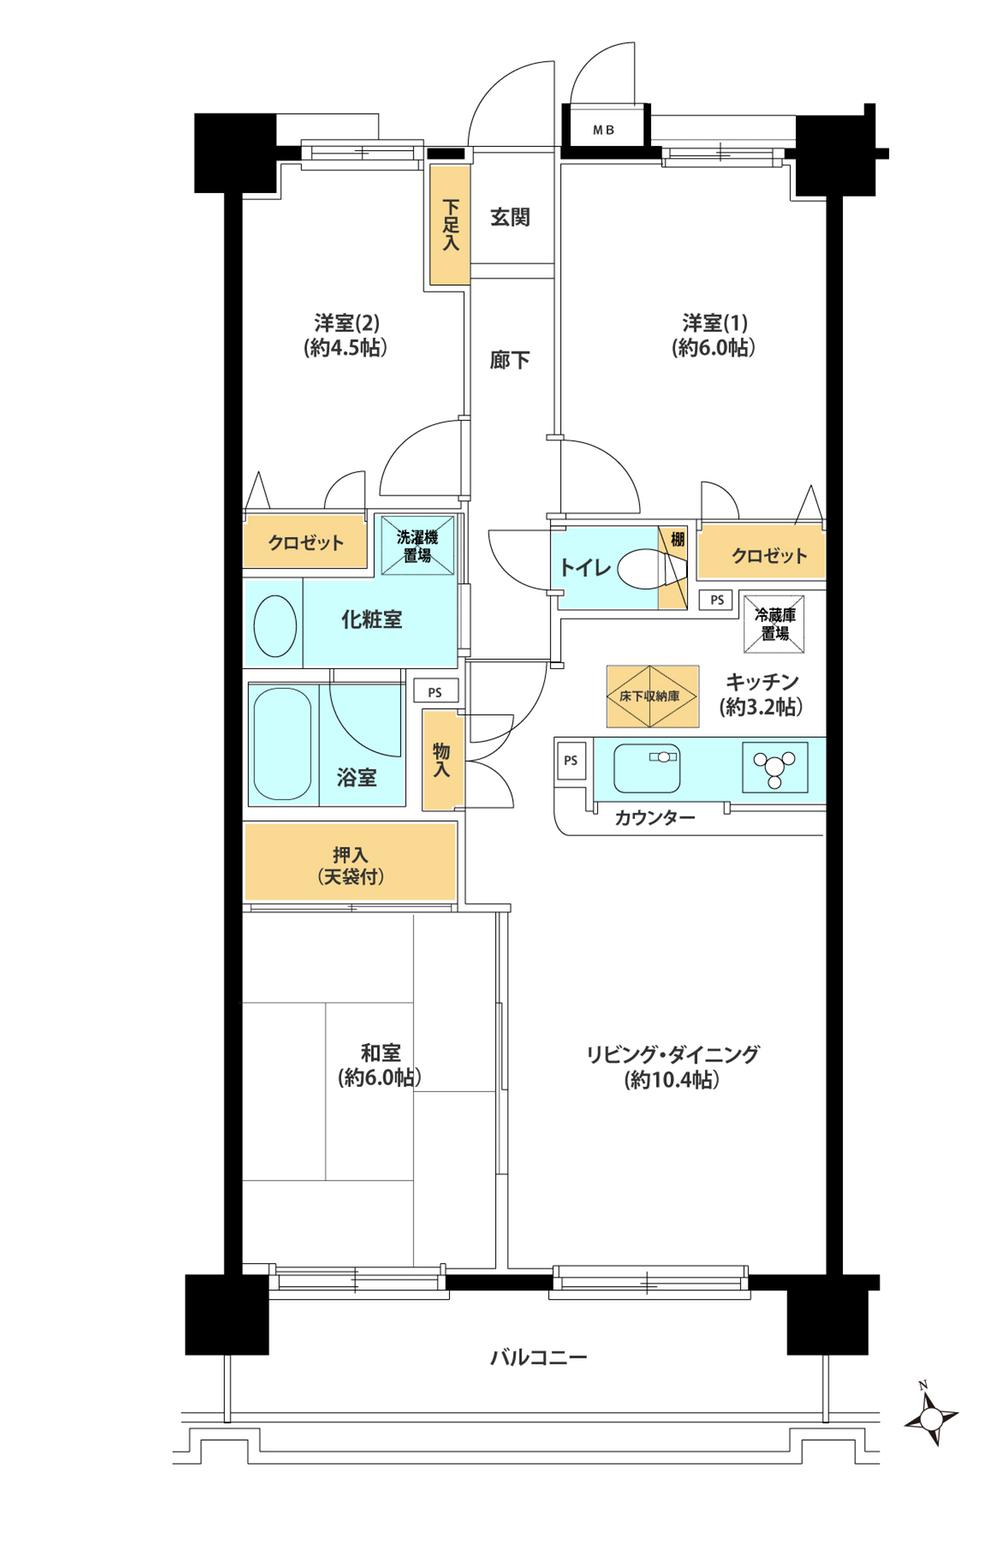 Floor plan. 3LDK, Price 21.9 million yen, Occupied area 65.89 sq m , Balcony area 8.85 sq m